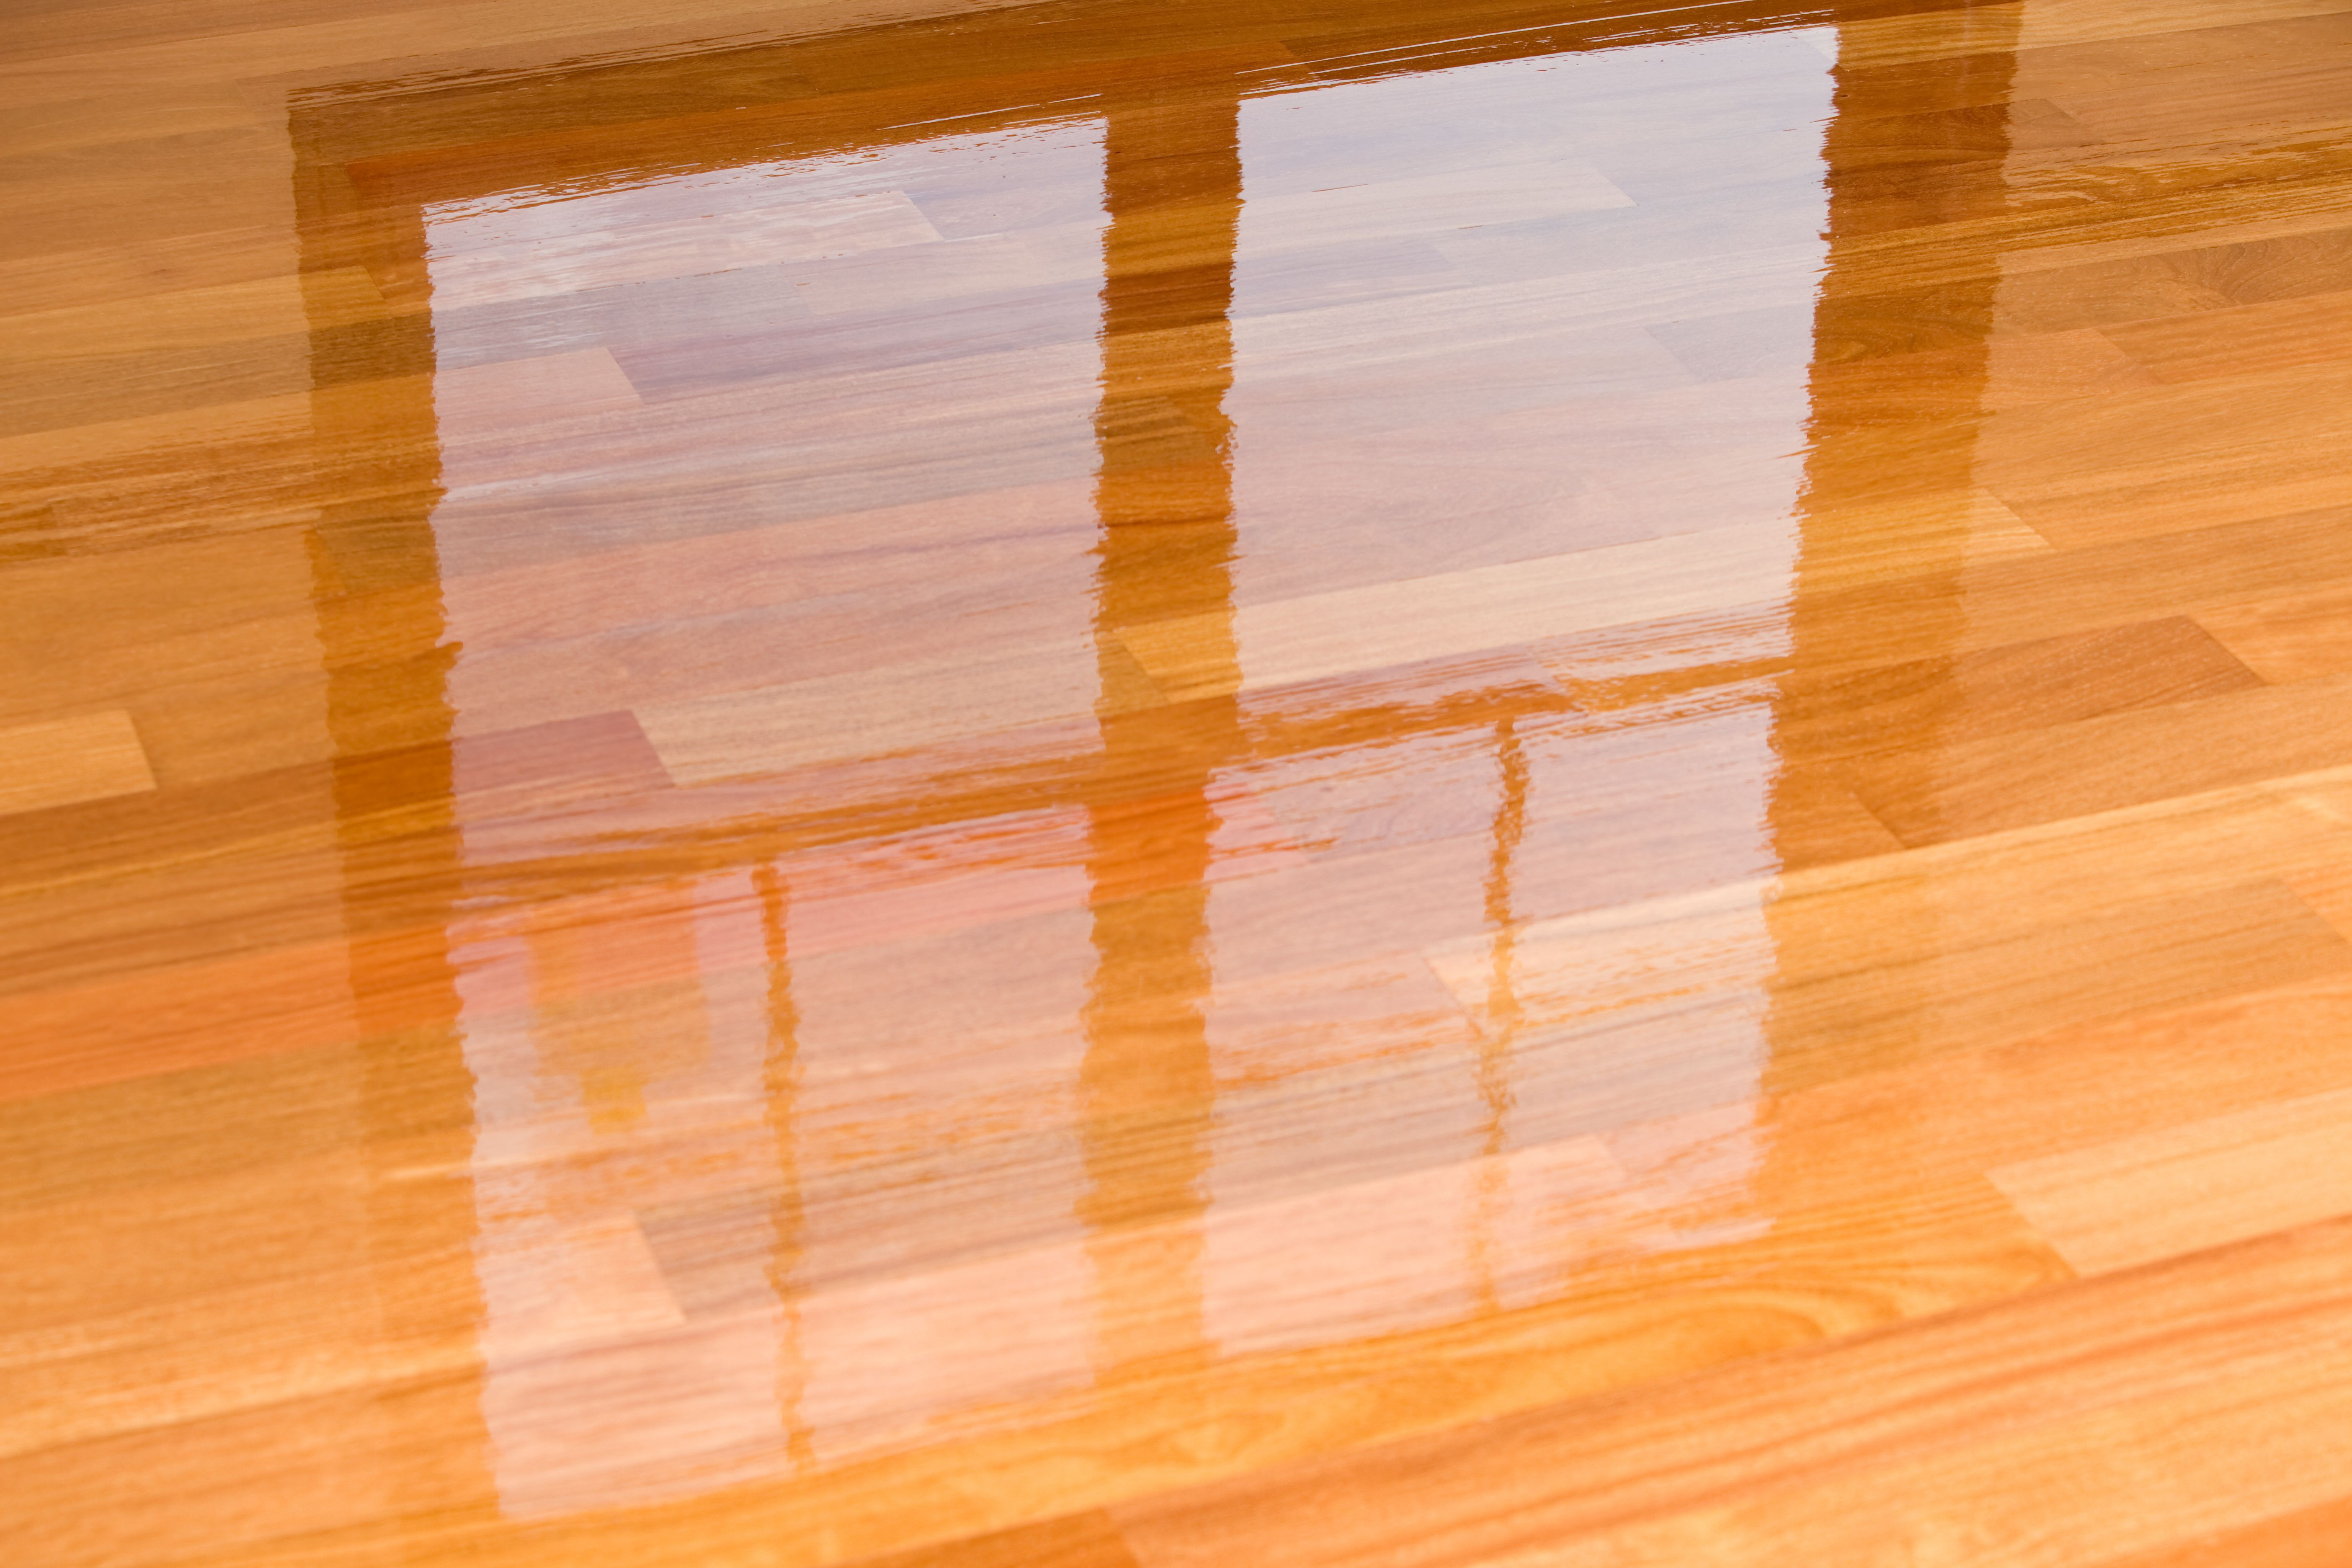 15 Wonderful Hardwood Floor Cost Estimator 2024 free download hardwood floor cost estimator of guide to laminate flooring water and damage repair with regard to wet polyurethane on new hardwood floor with window reflection 183846705 582e34da3df78c6f6a4